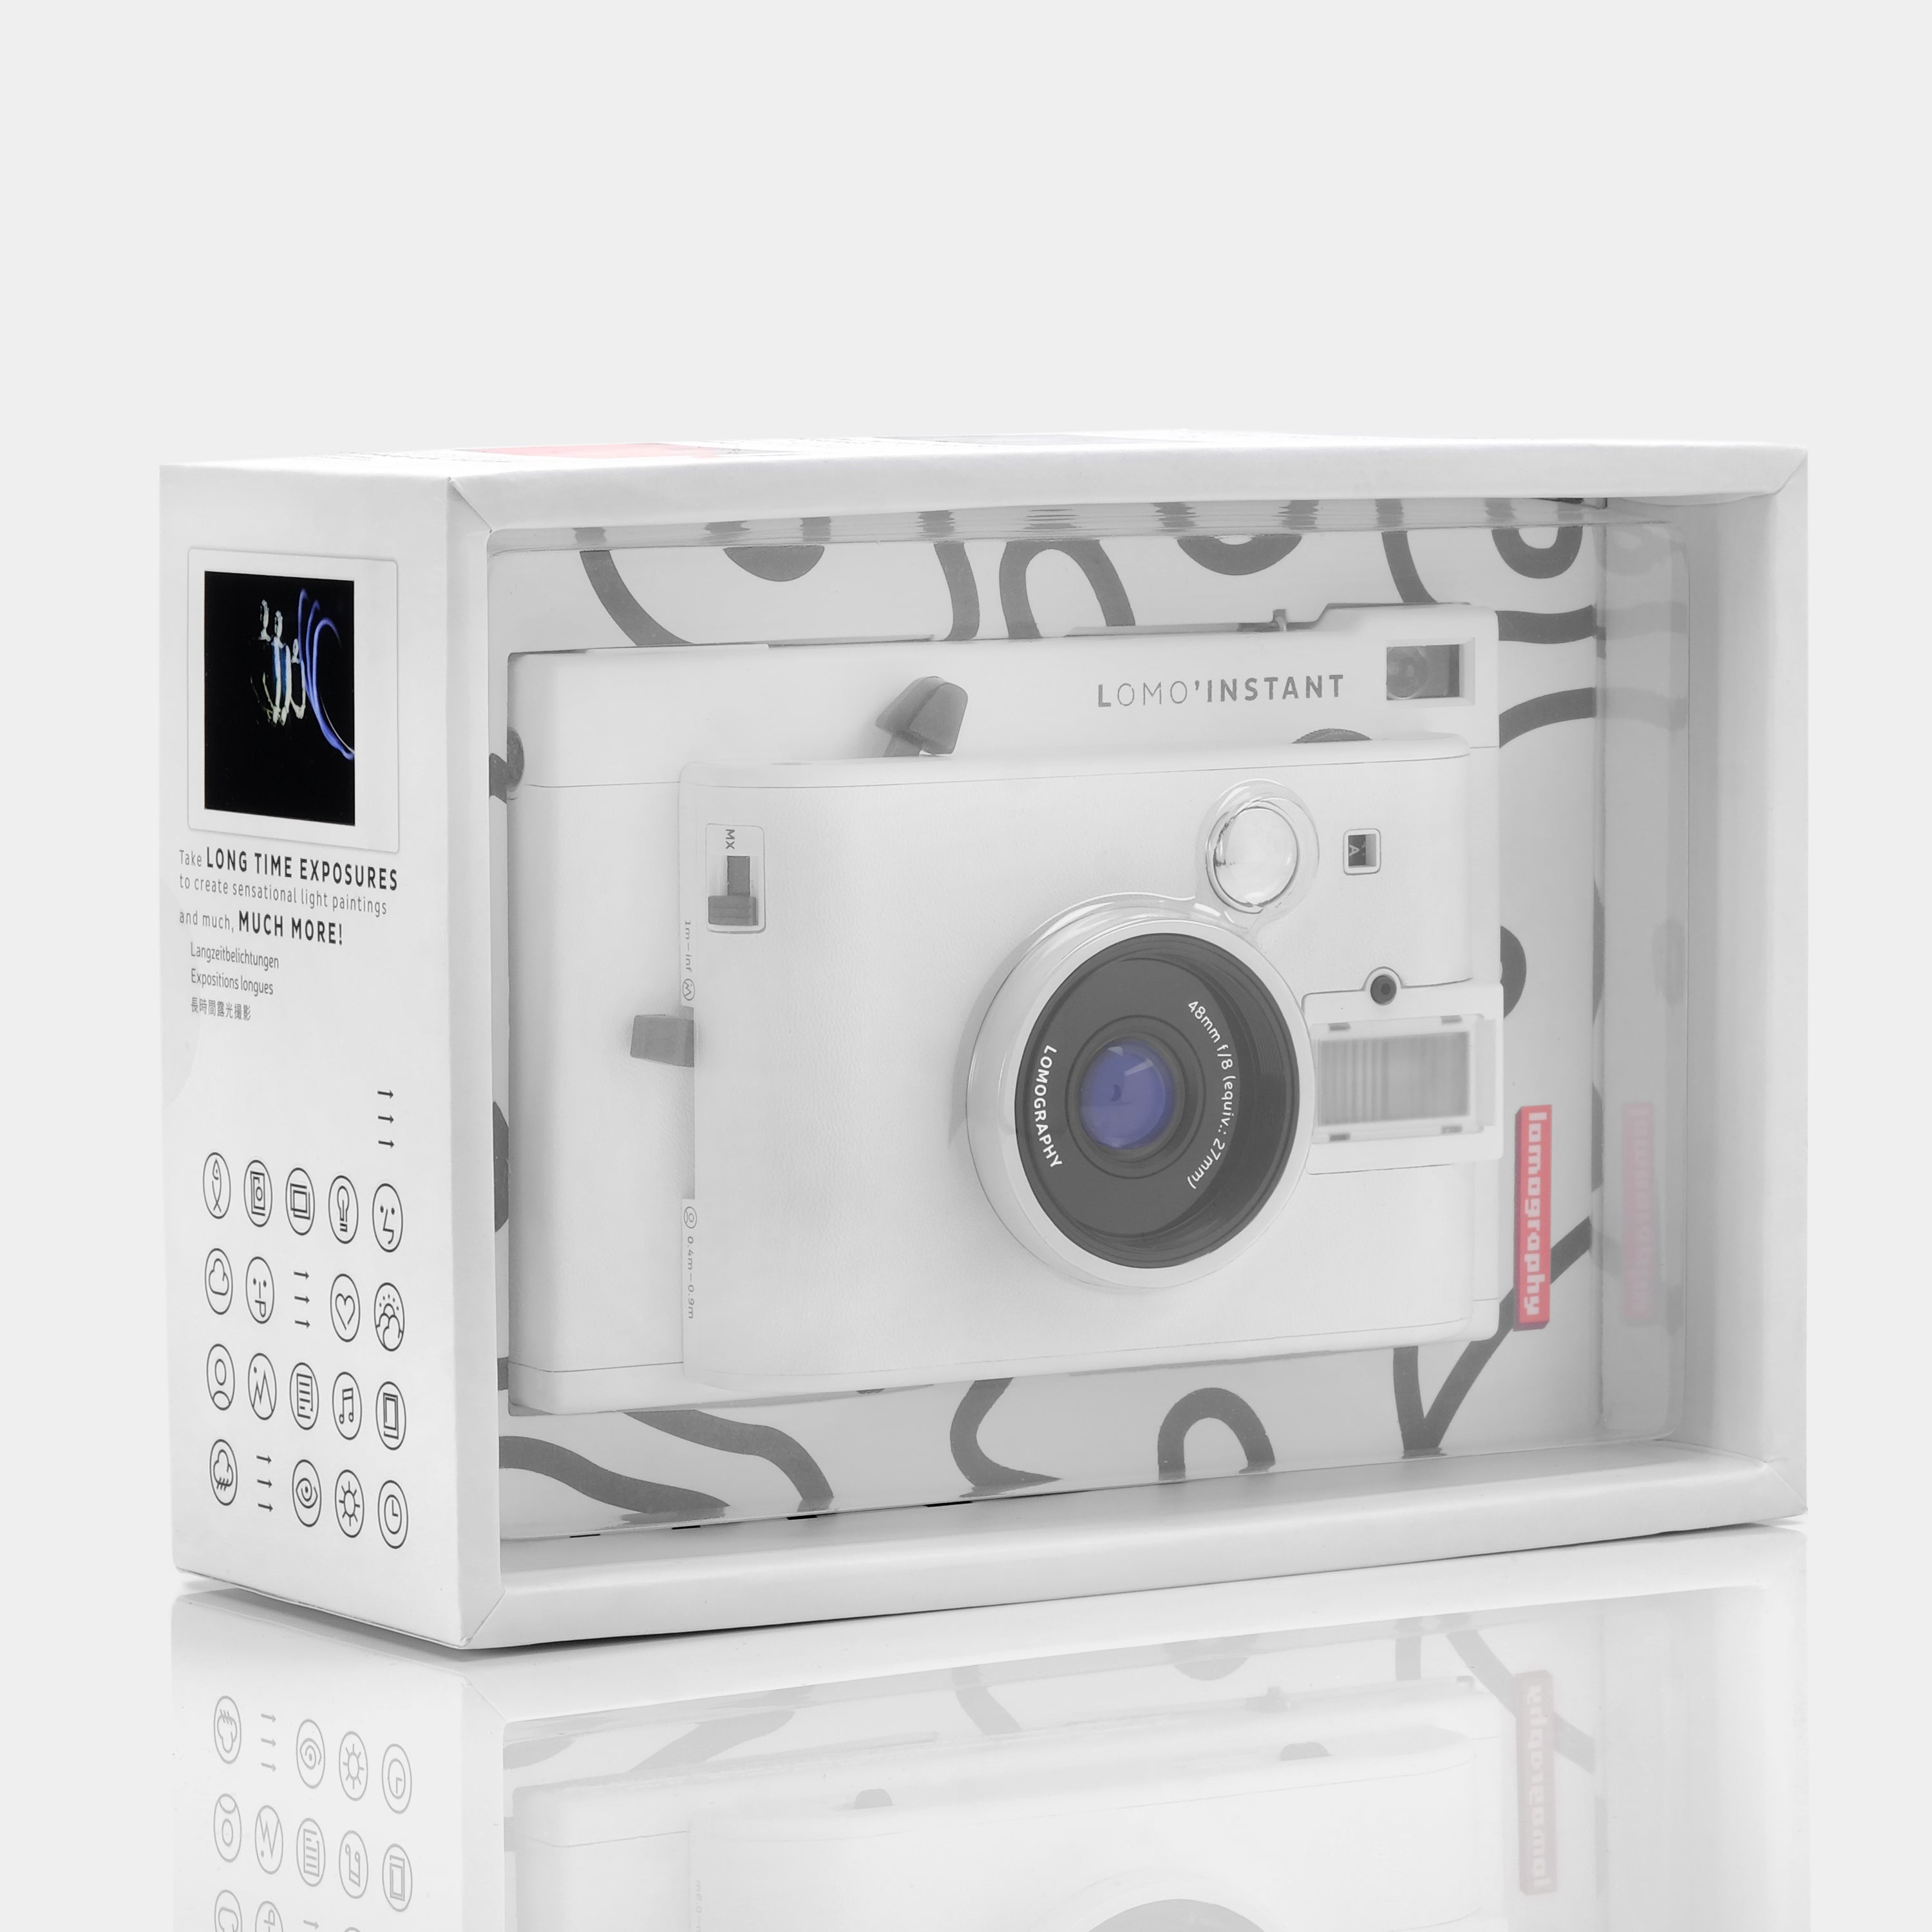 Lomography Lomo'Instant Instax Mini White Instant Film Camera